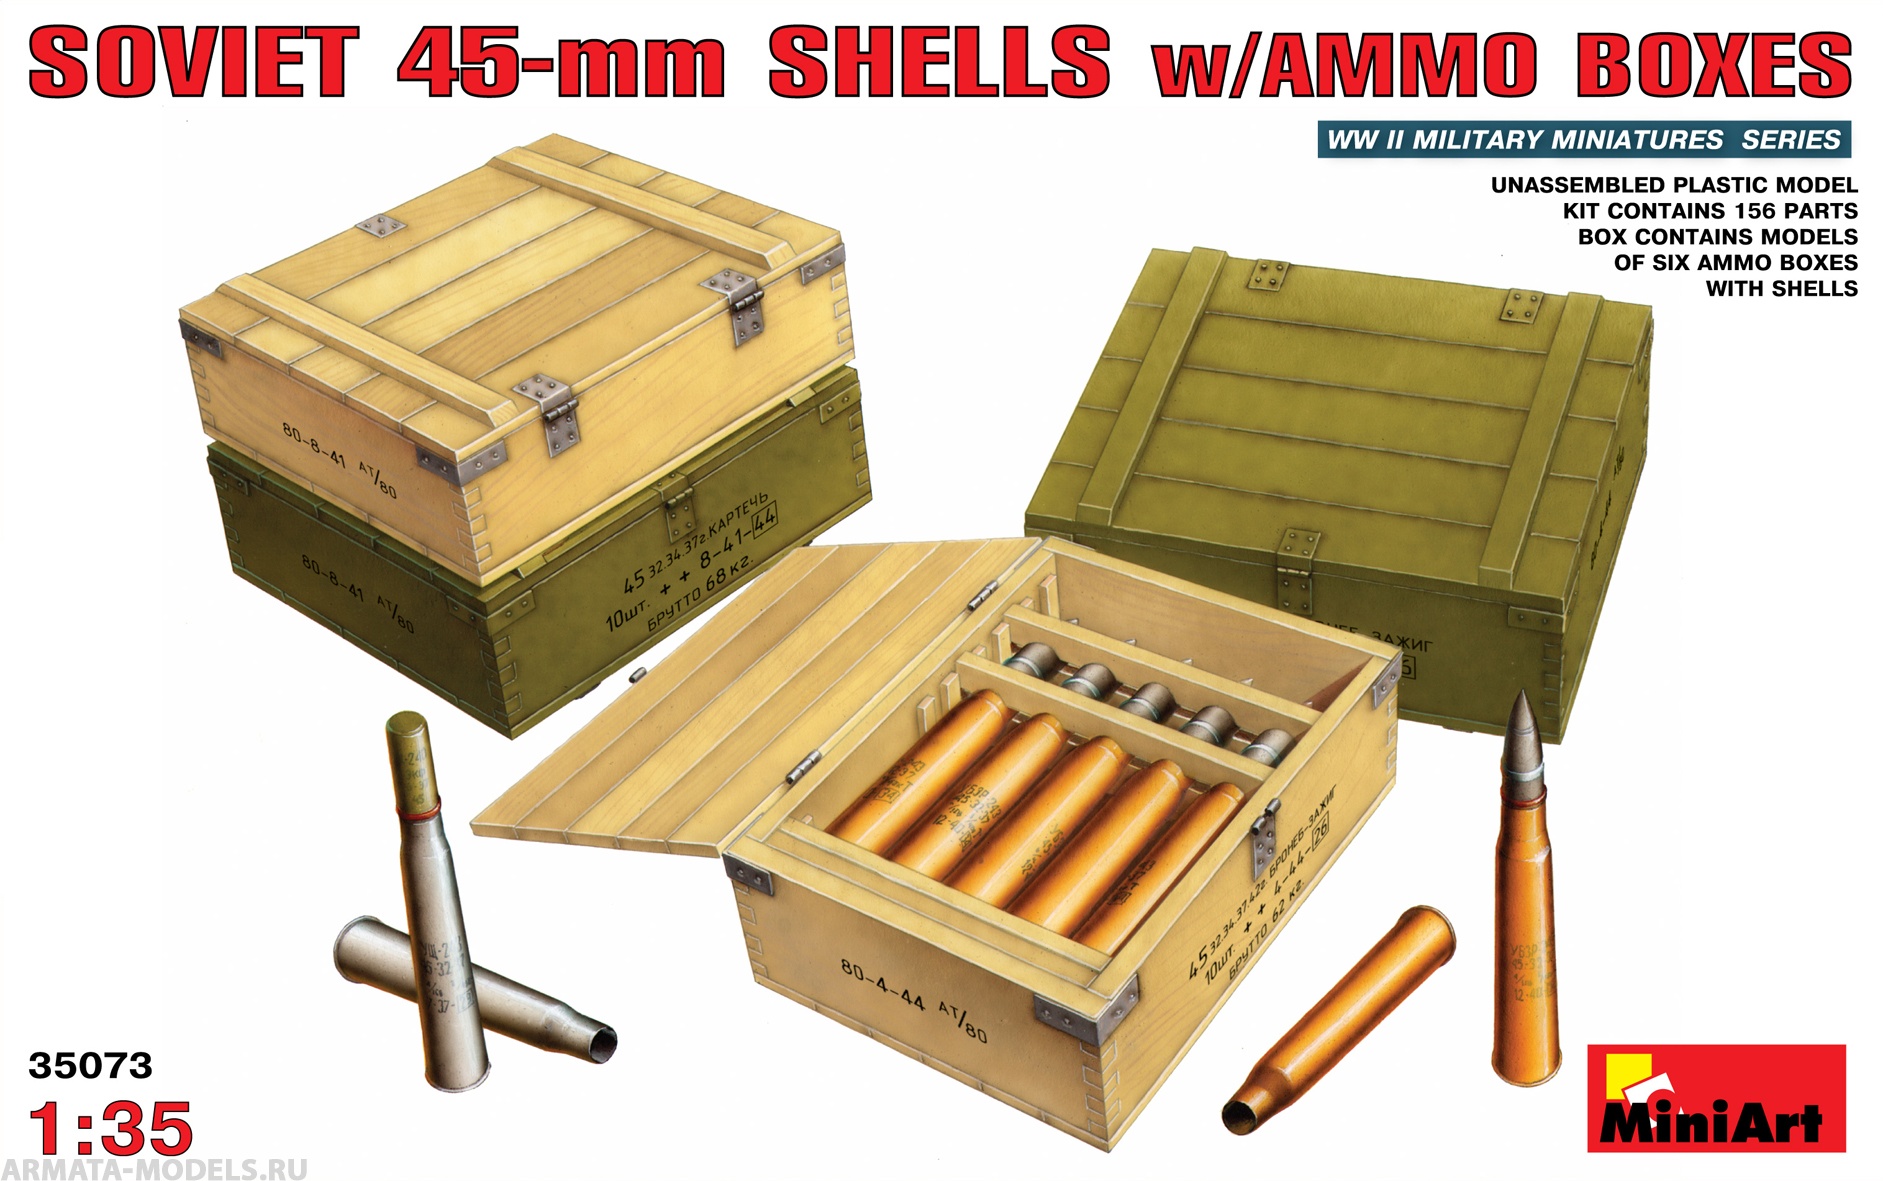 35073 MINIART 1/35 советские 45мм снаряды с ящиками Soviet 45-mm Shells with Ammo Boxes